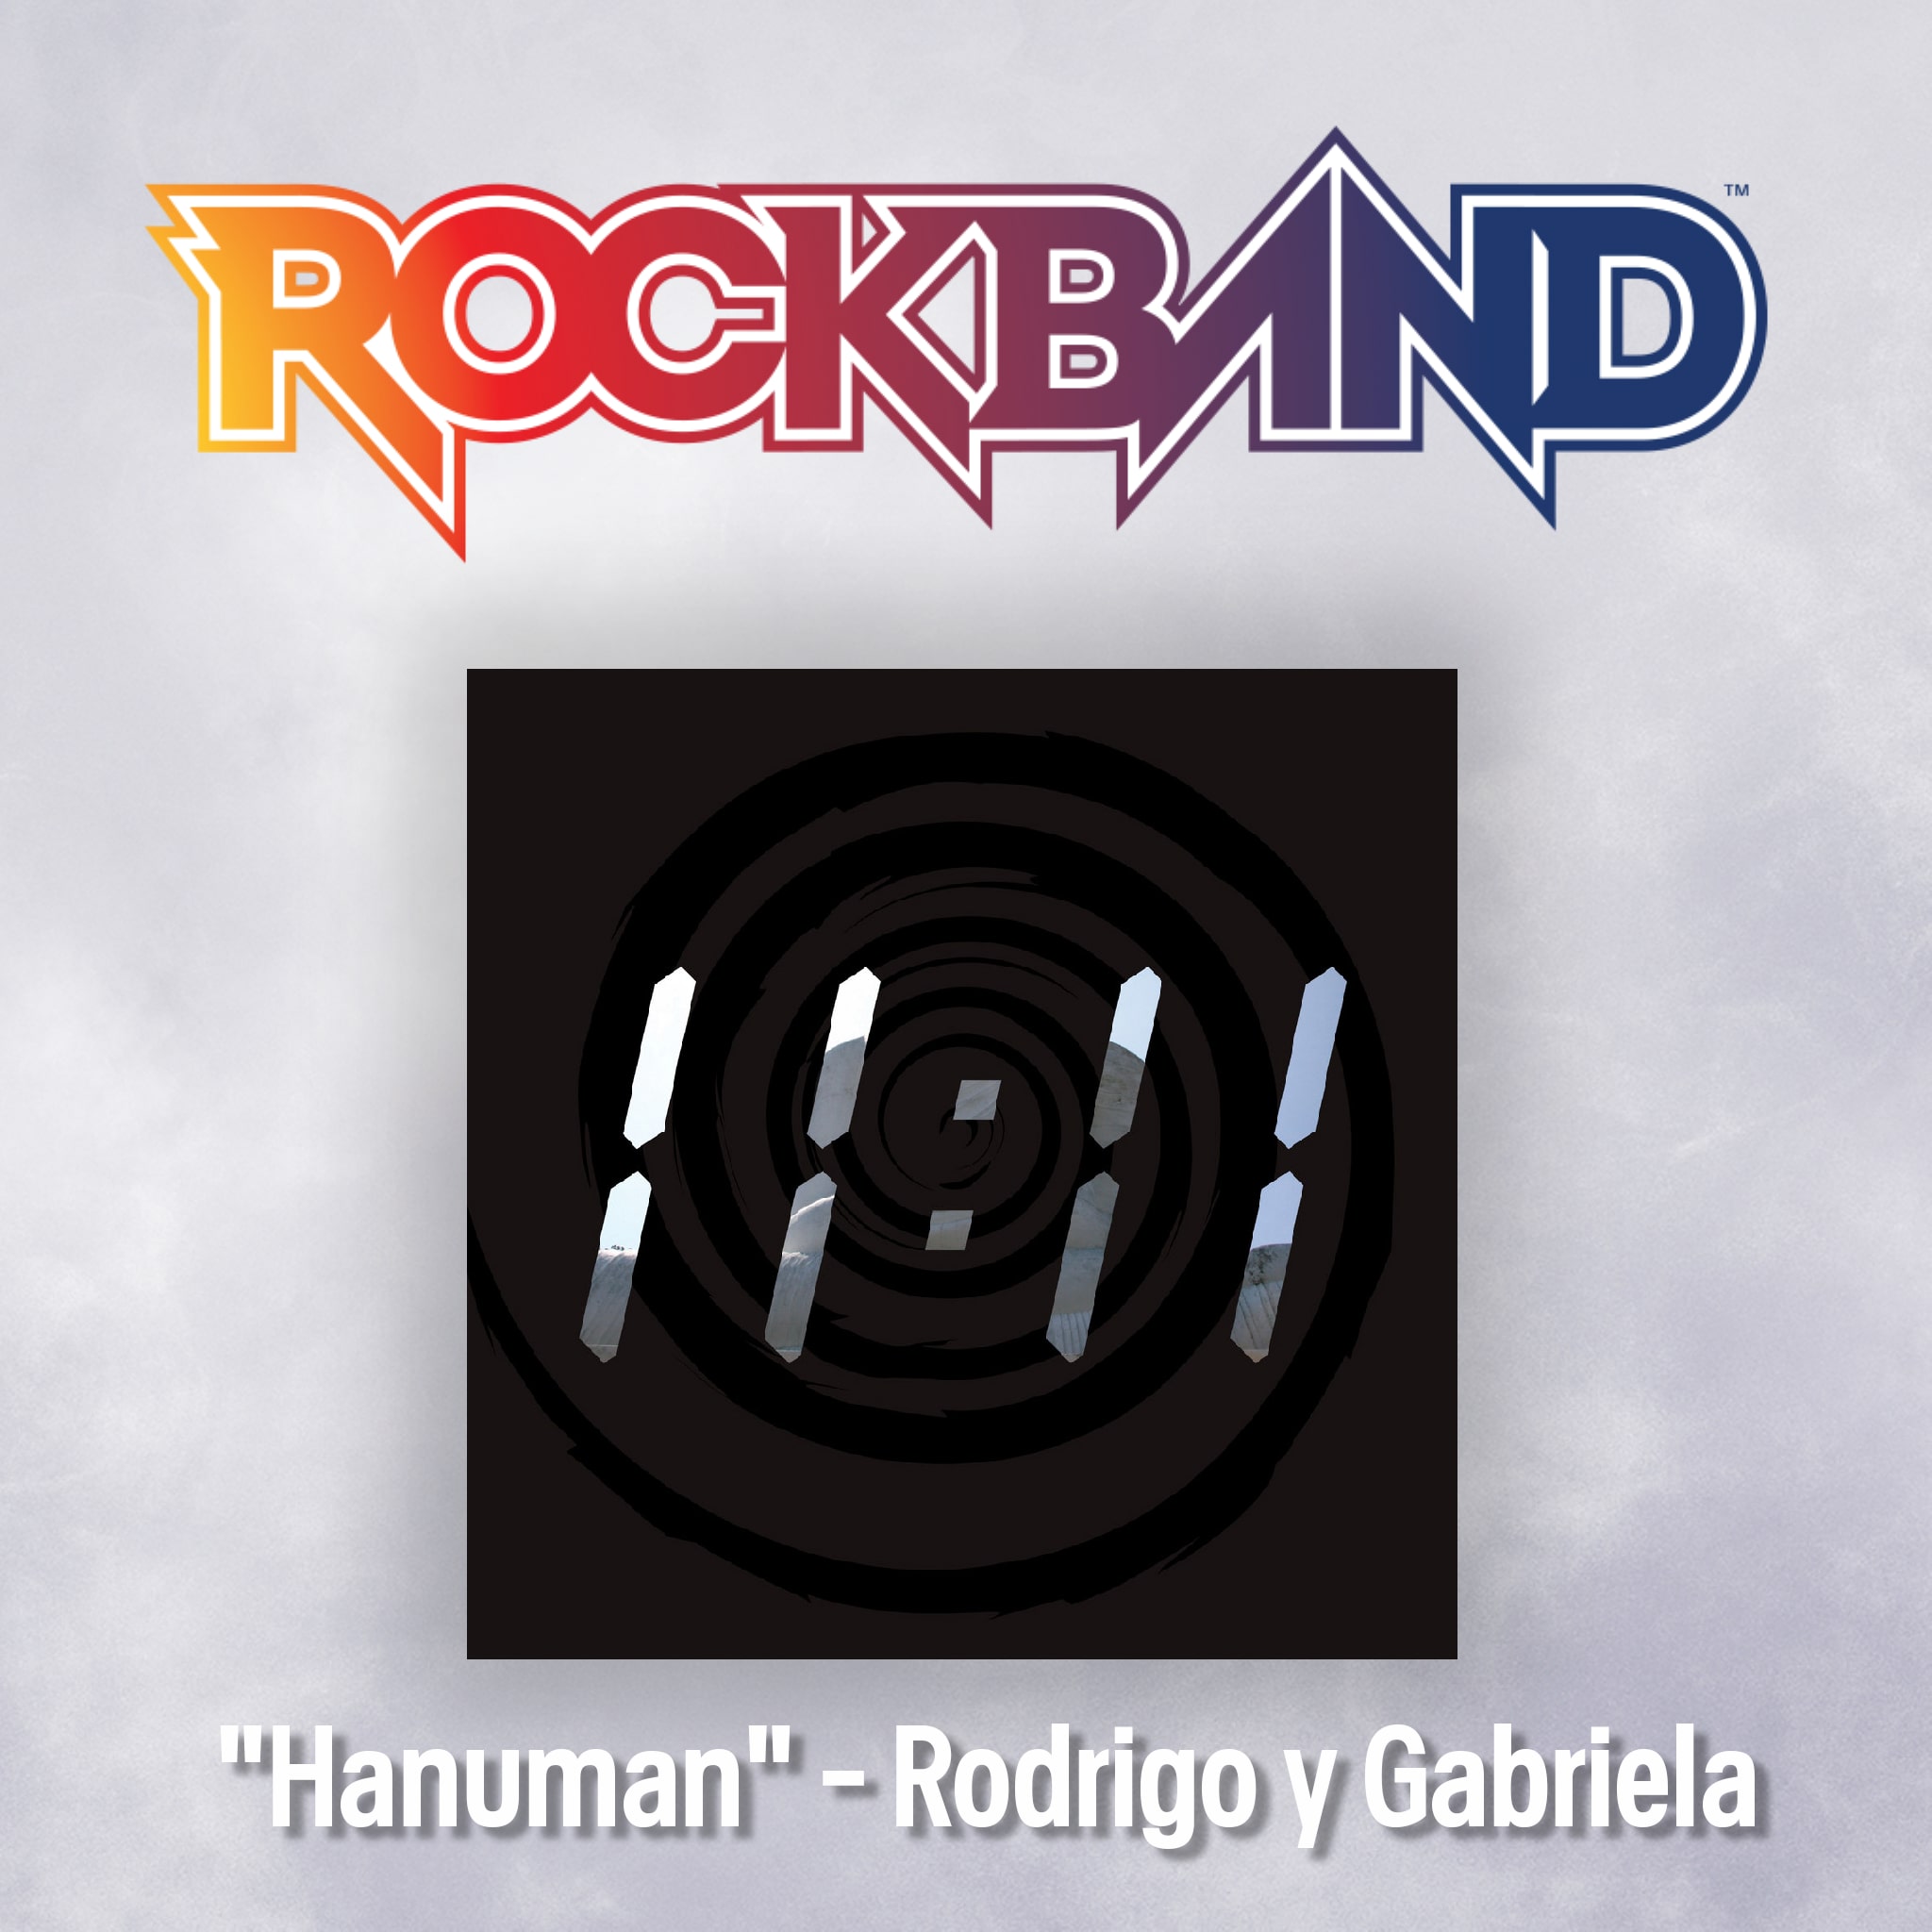 'Hanuman' - Rodrigo y Gabriela